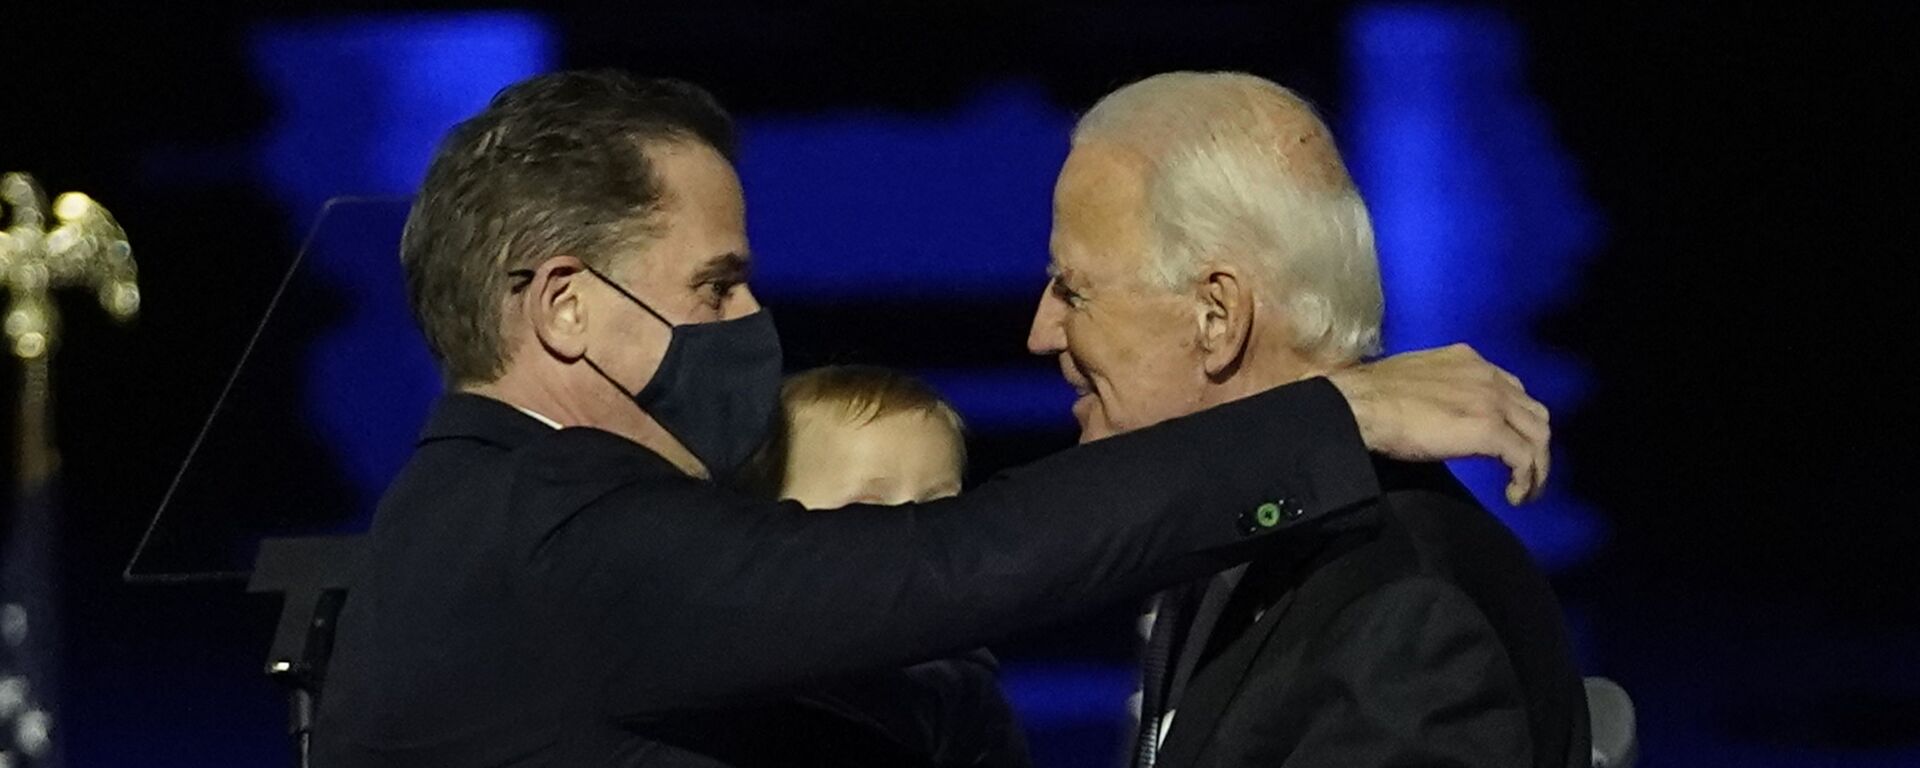 President-elect Joe Biden, right, embraces his son Hunter Biden, left, Saturday, Nov. 7, 2020, in Wilmington, Del. - Sputnik International, 1920, 21.05.2021